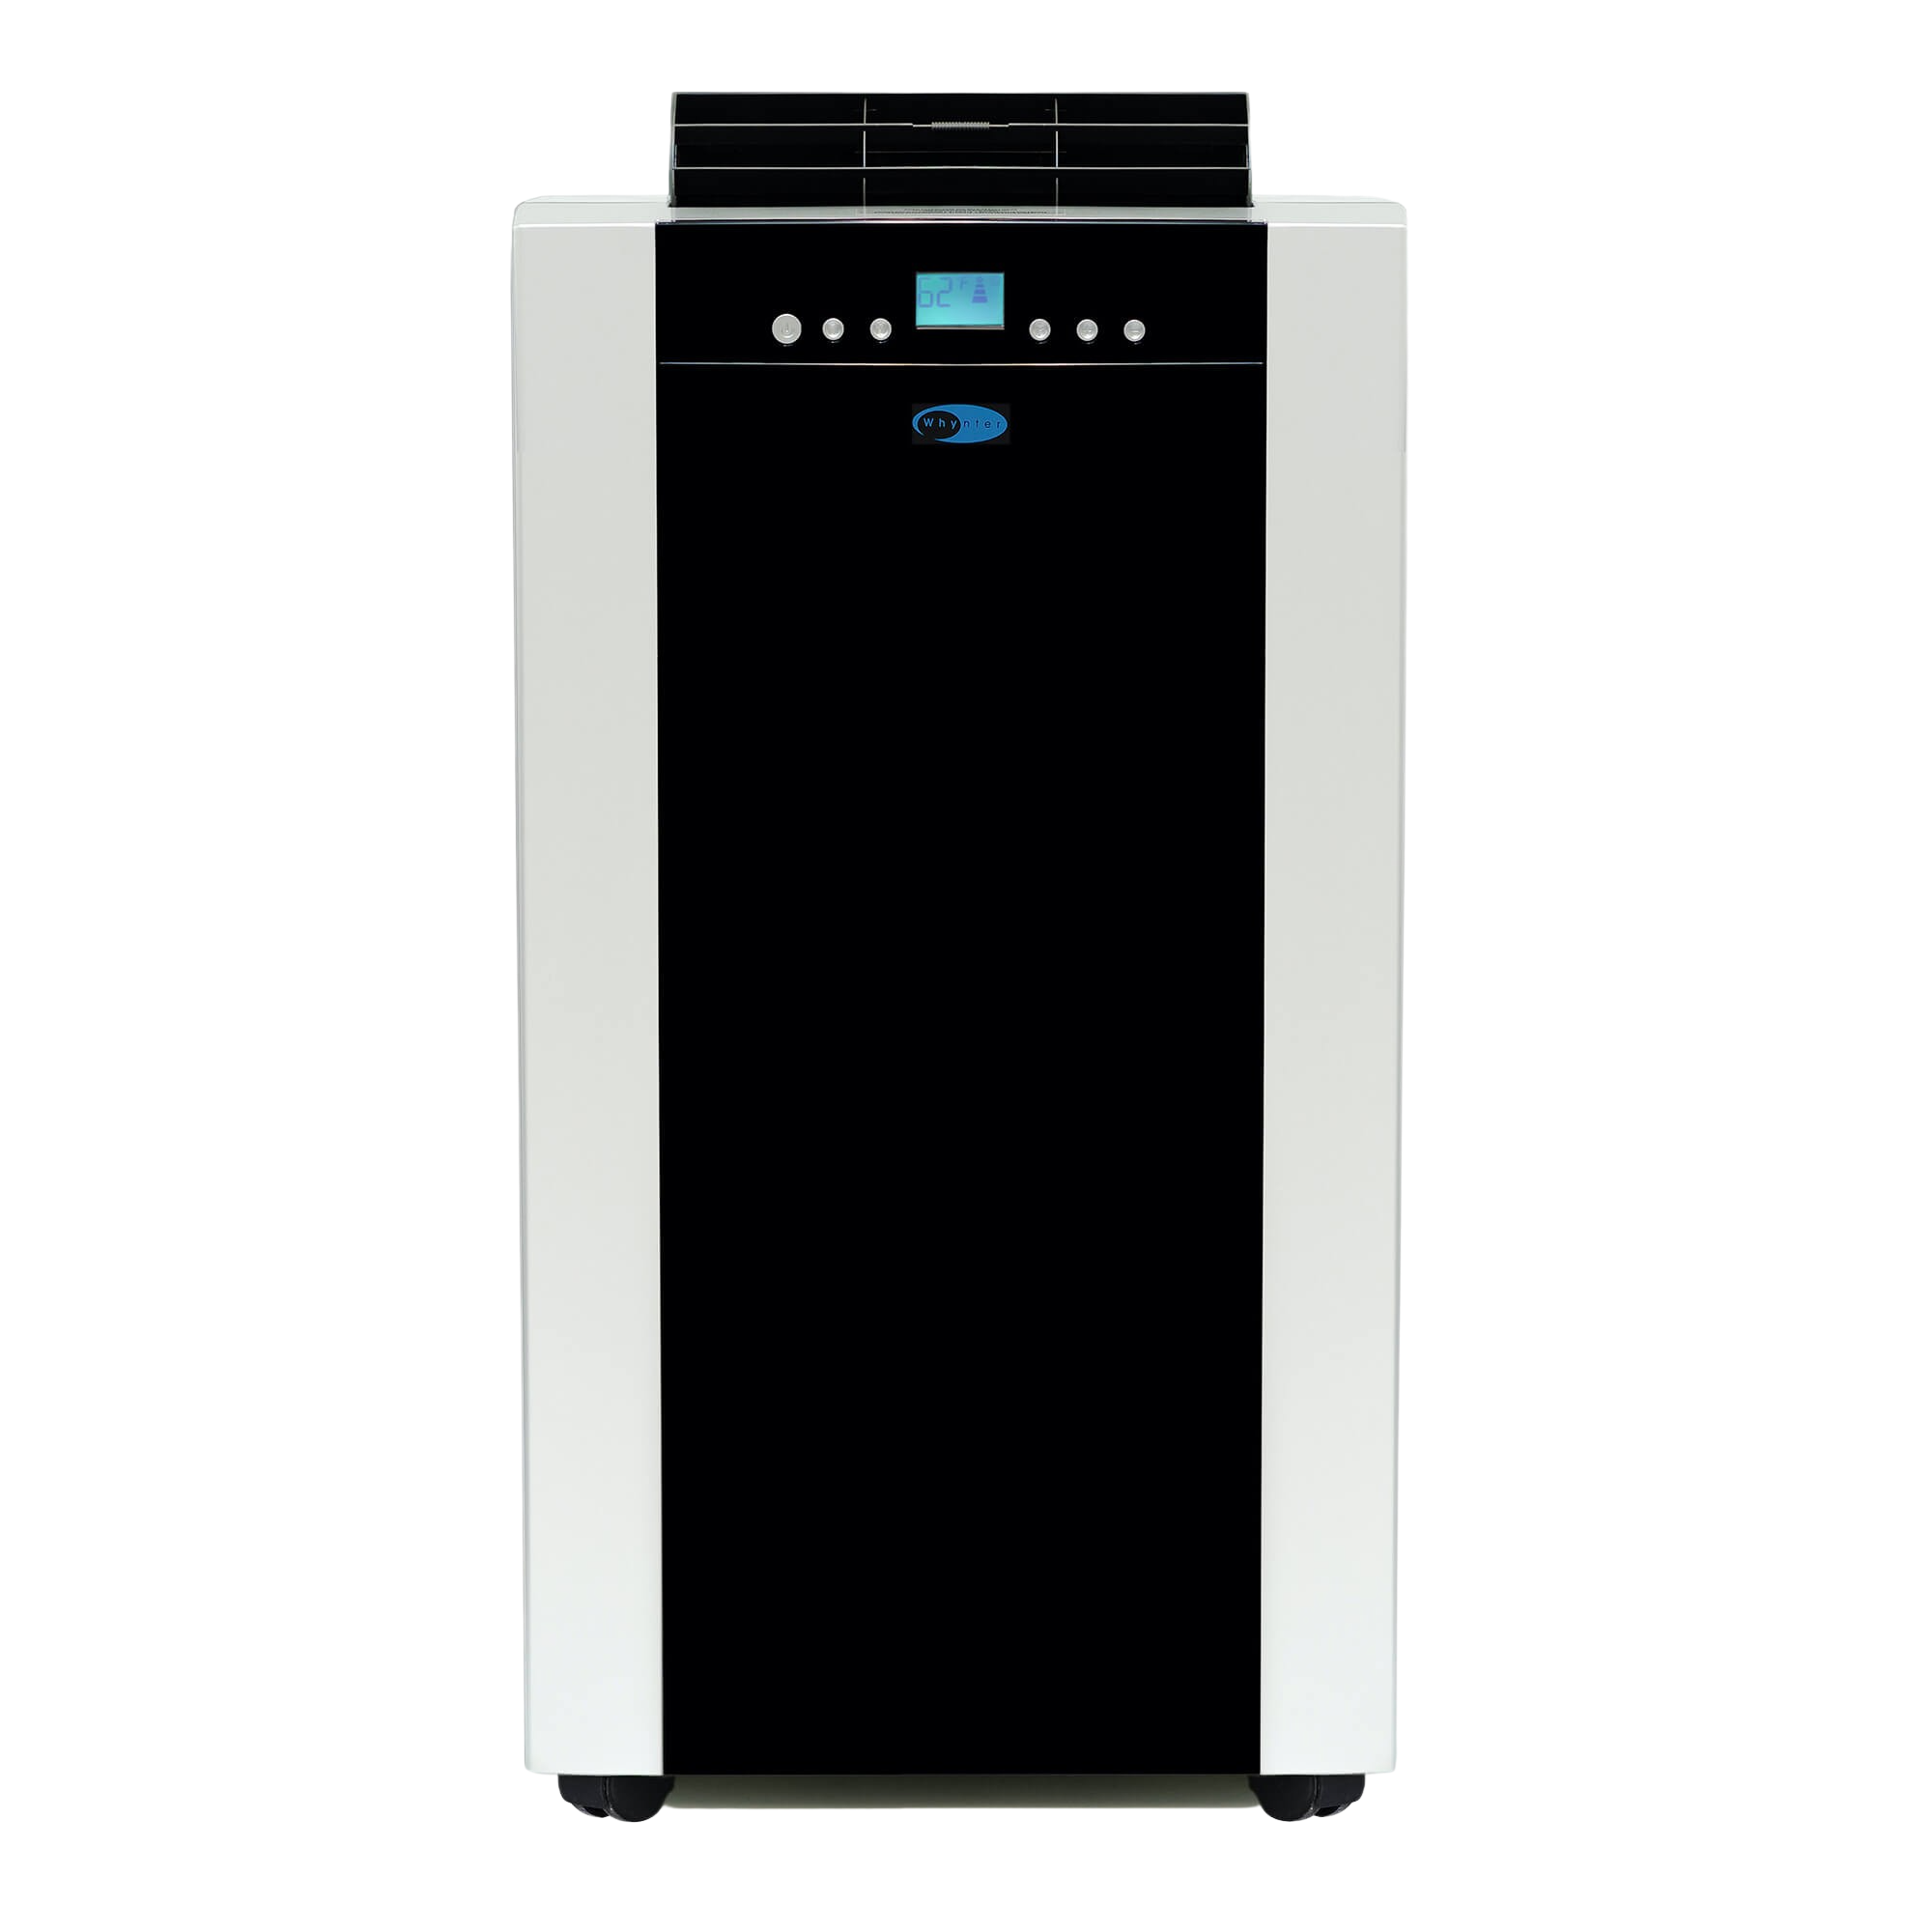 Whynter ARC-14SH 14,000 BTU Portable Air Conditioner Heat with Dehumidifier New